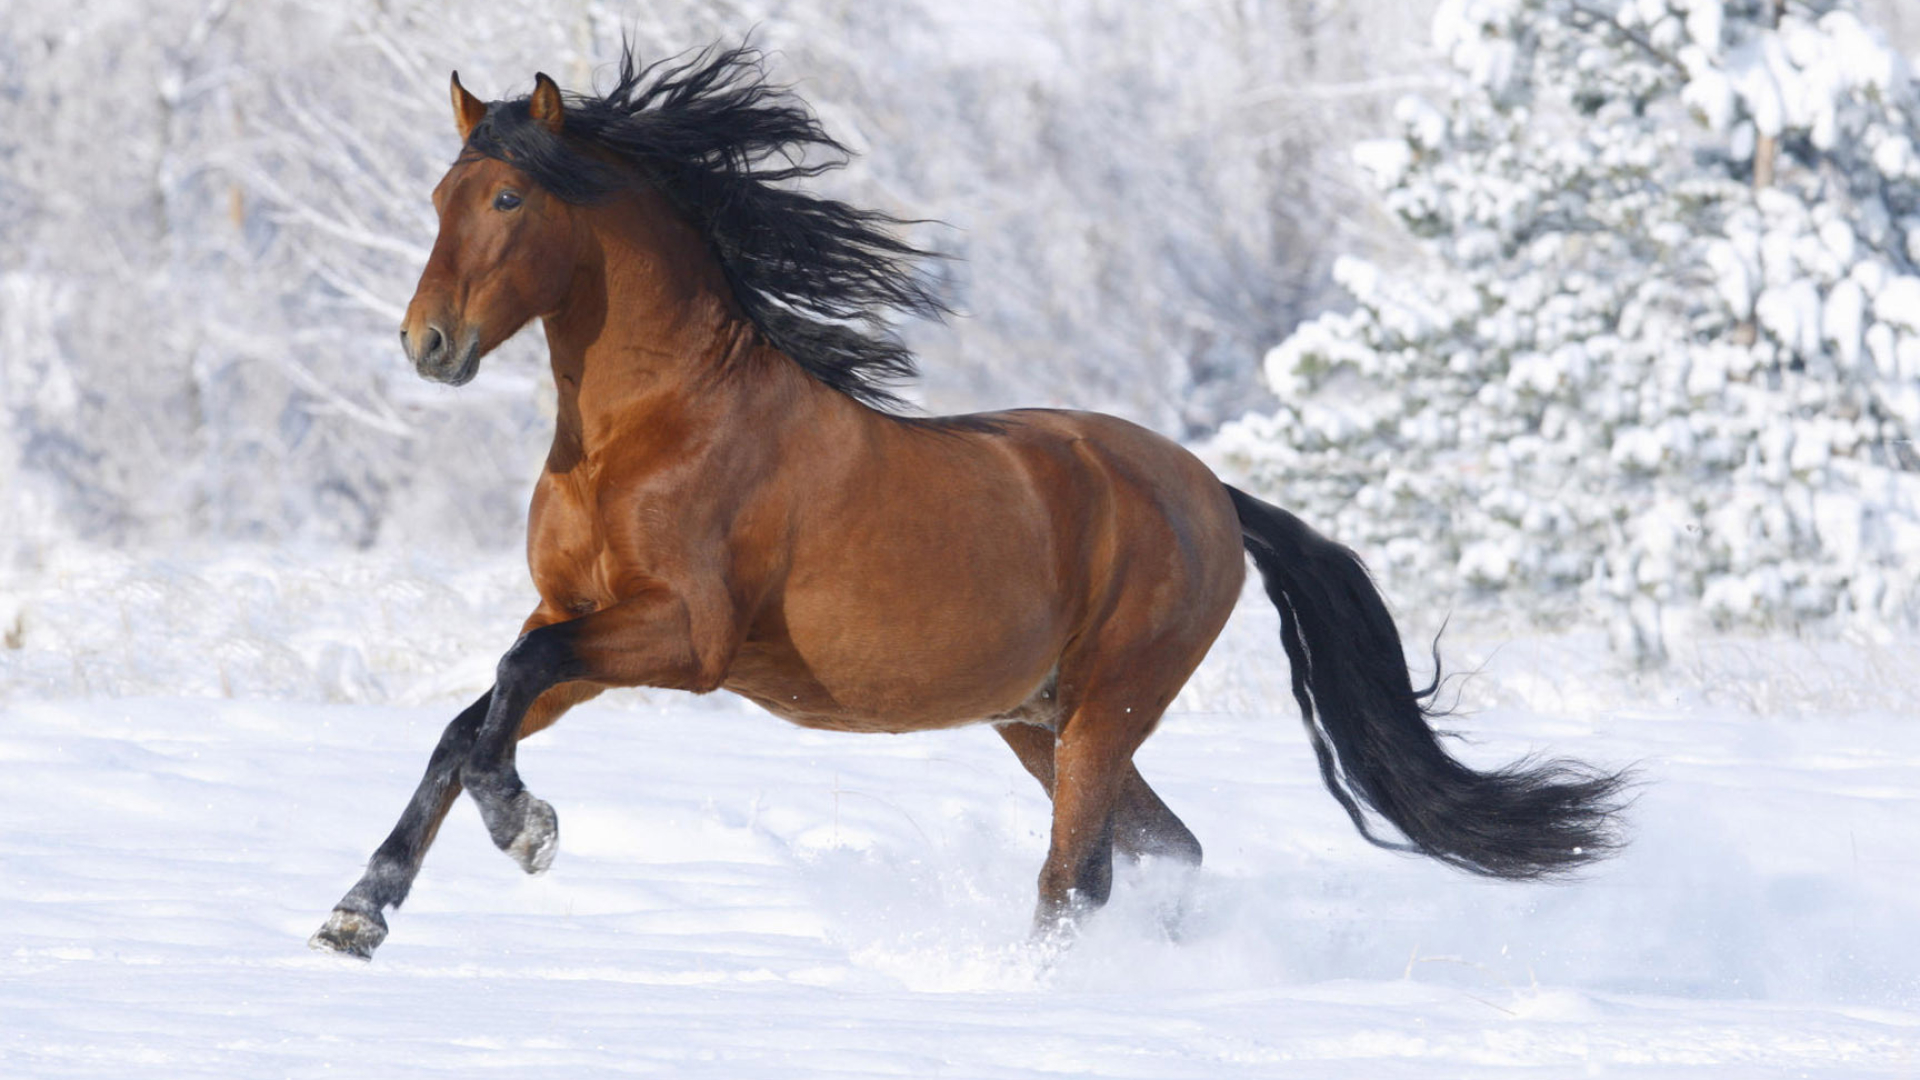 Horse: Galloping yearling, Terrestrial animal, Mane. 1920x1080 Full HD Wallpaper.